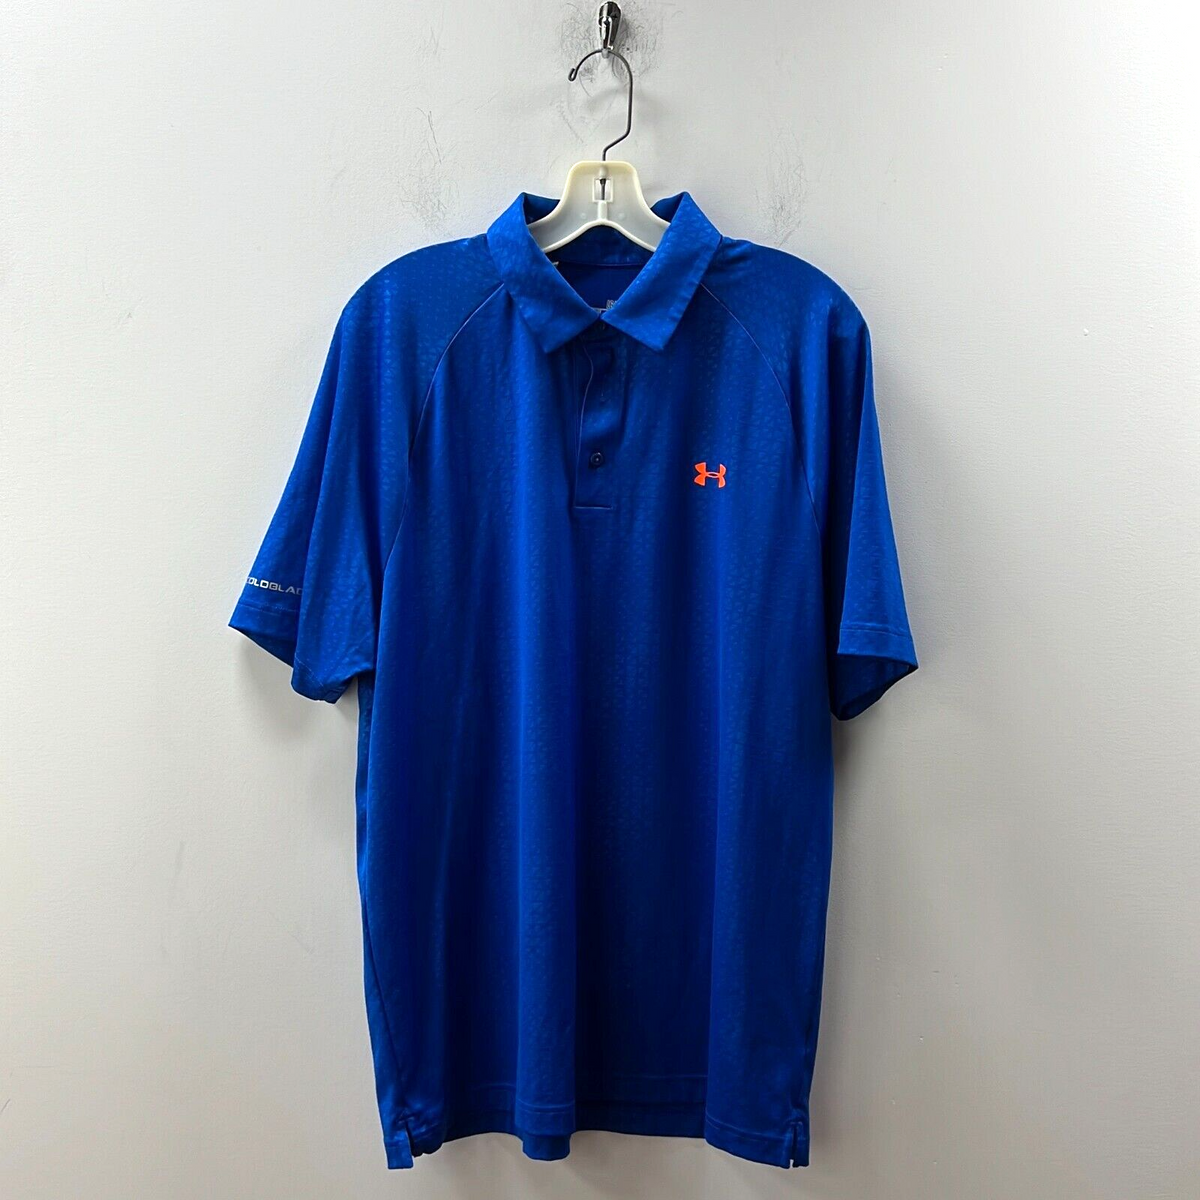 Under Armour Men's Blue Heat Gear Loose Fit Short Sleeve Golf Polo Shirt  Size L